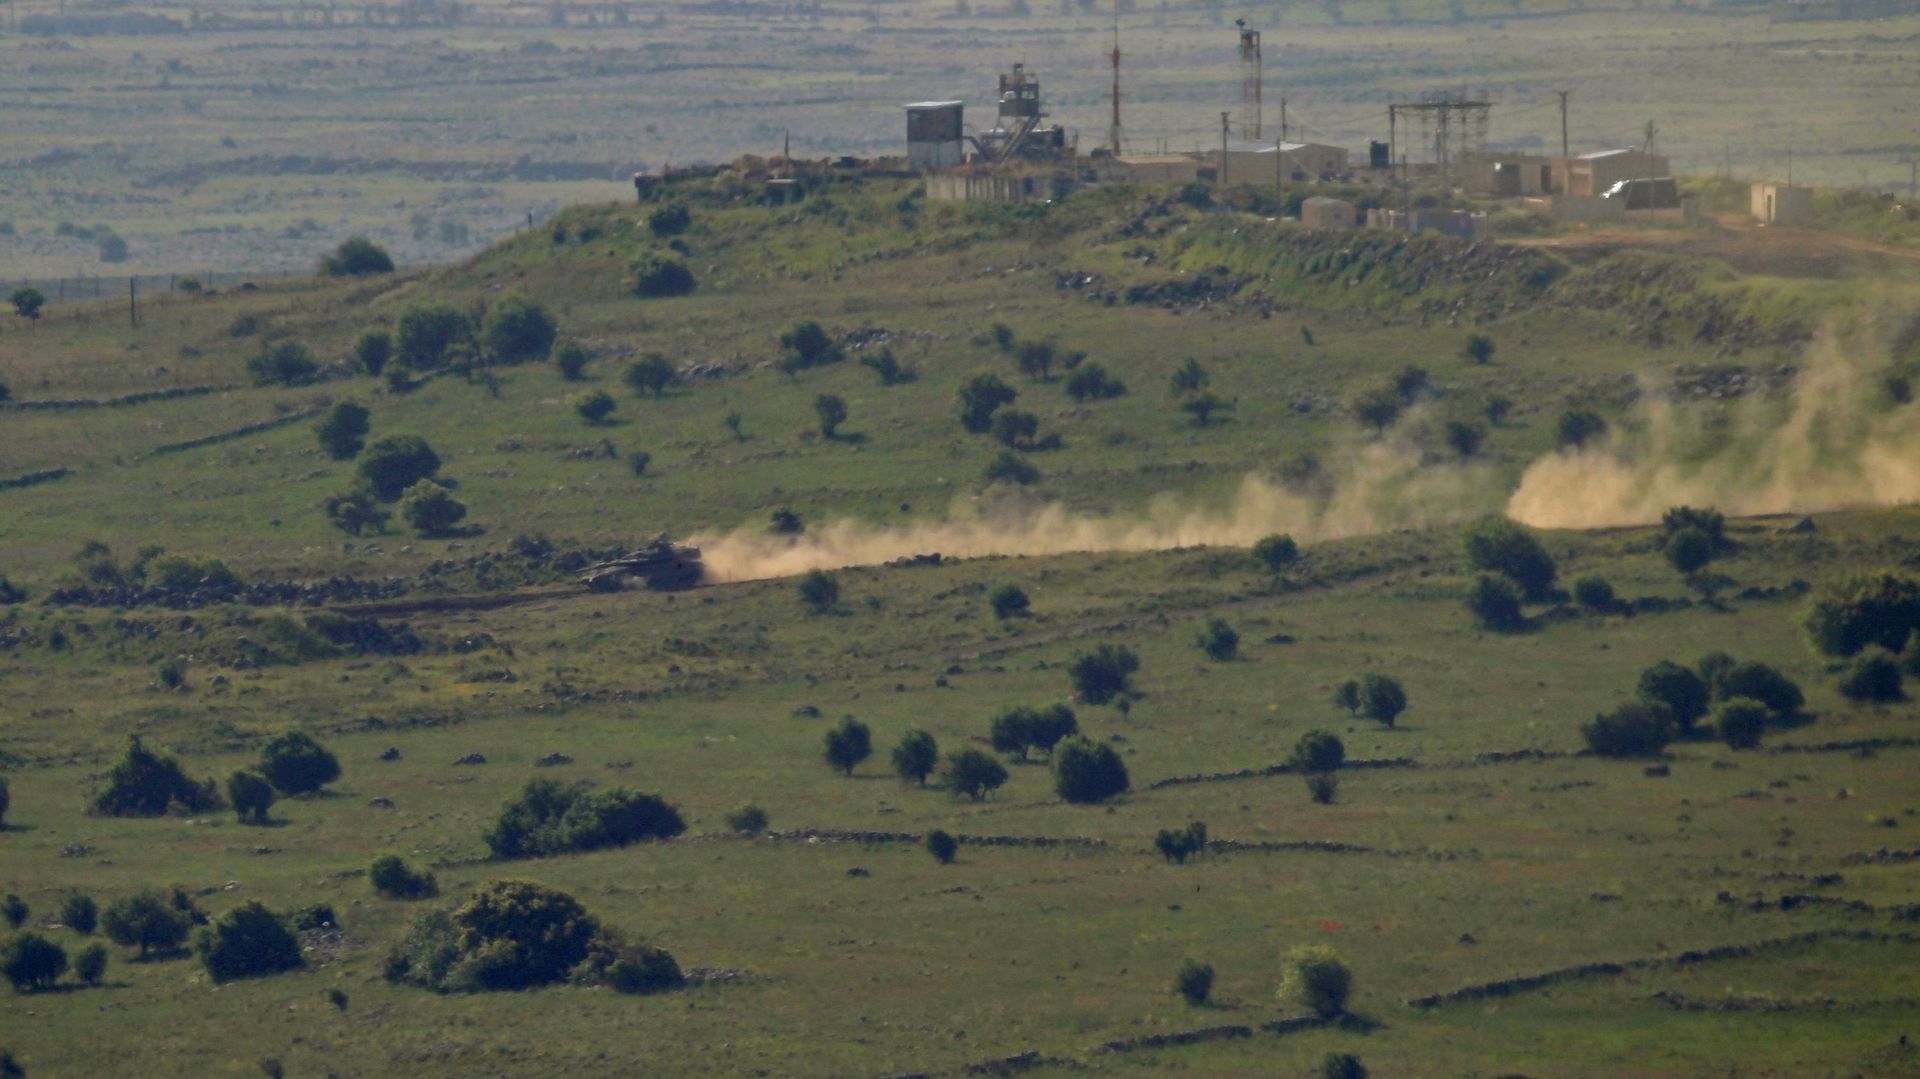 Tensions Iran/Israël: le plateau du Golan, principal contentieux israélo-syrien